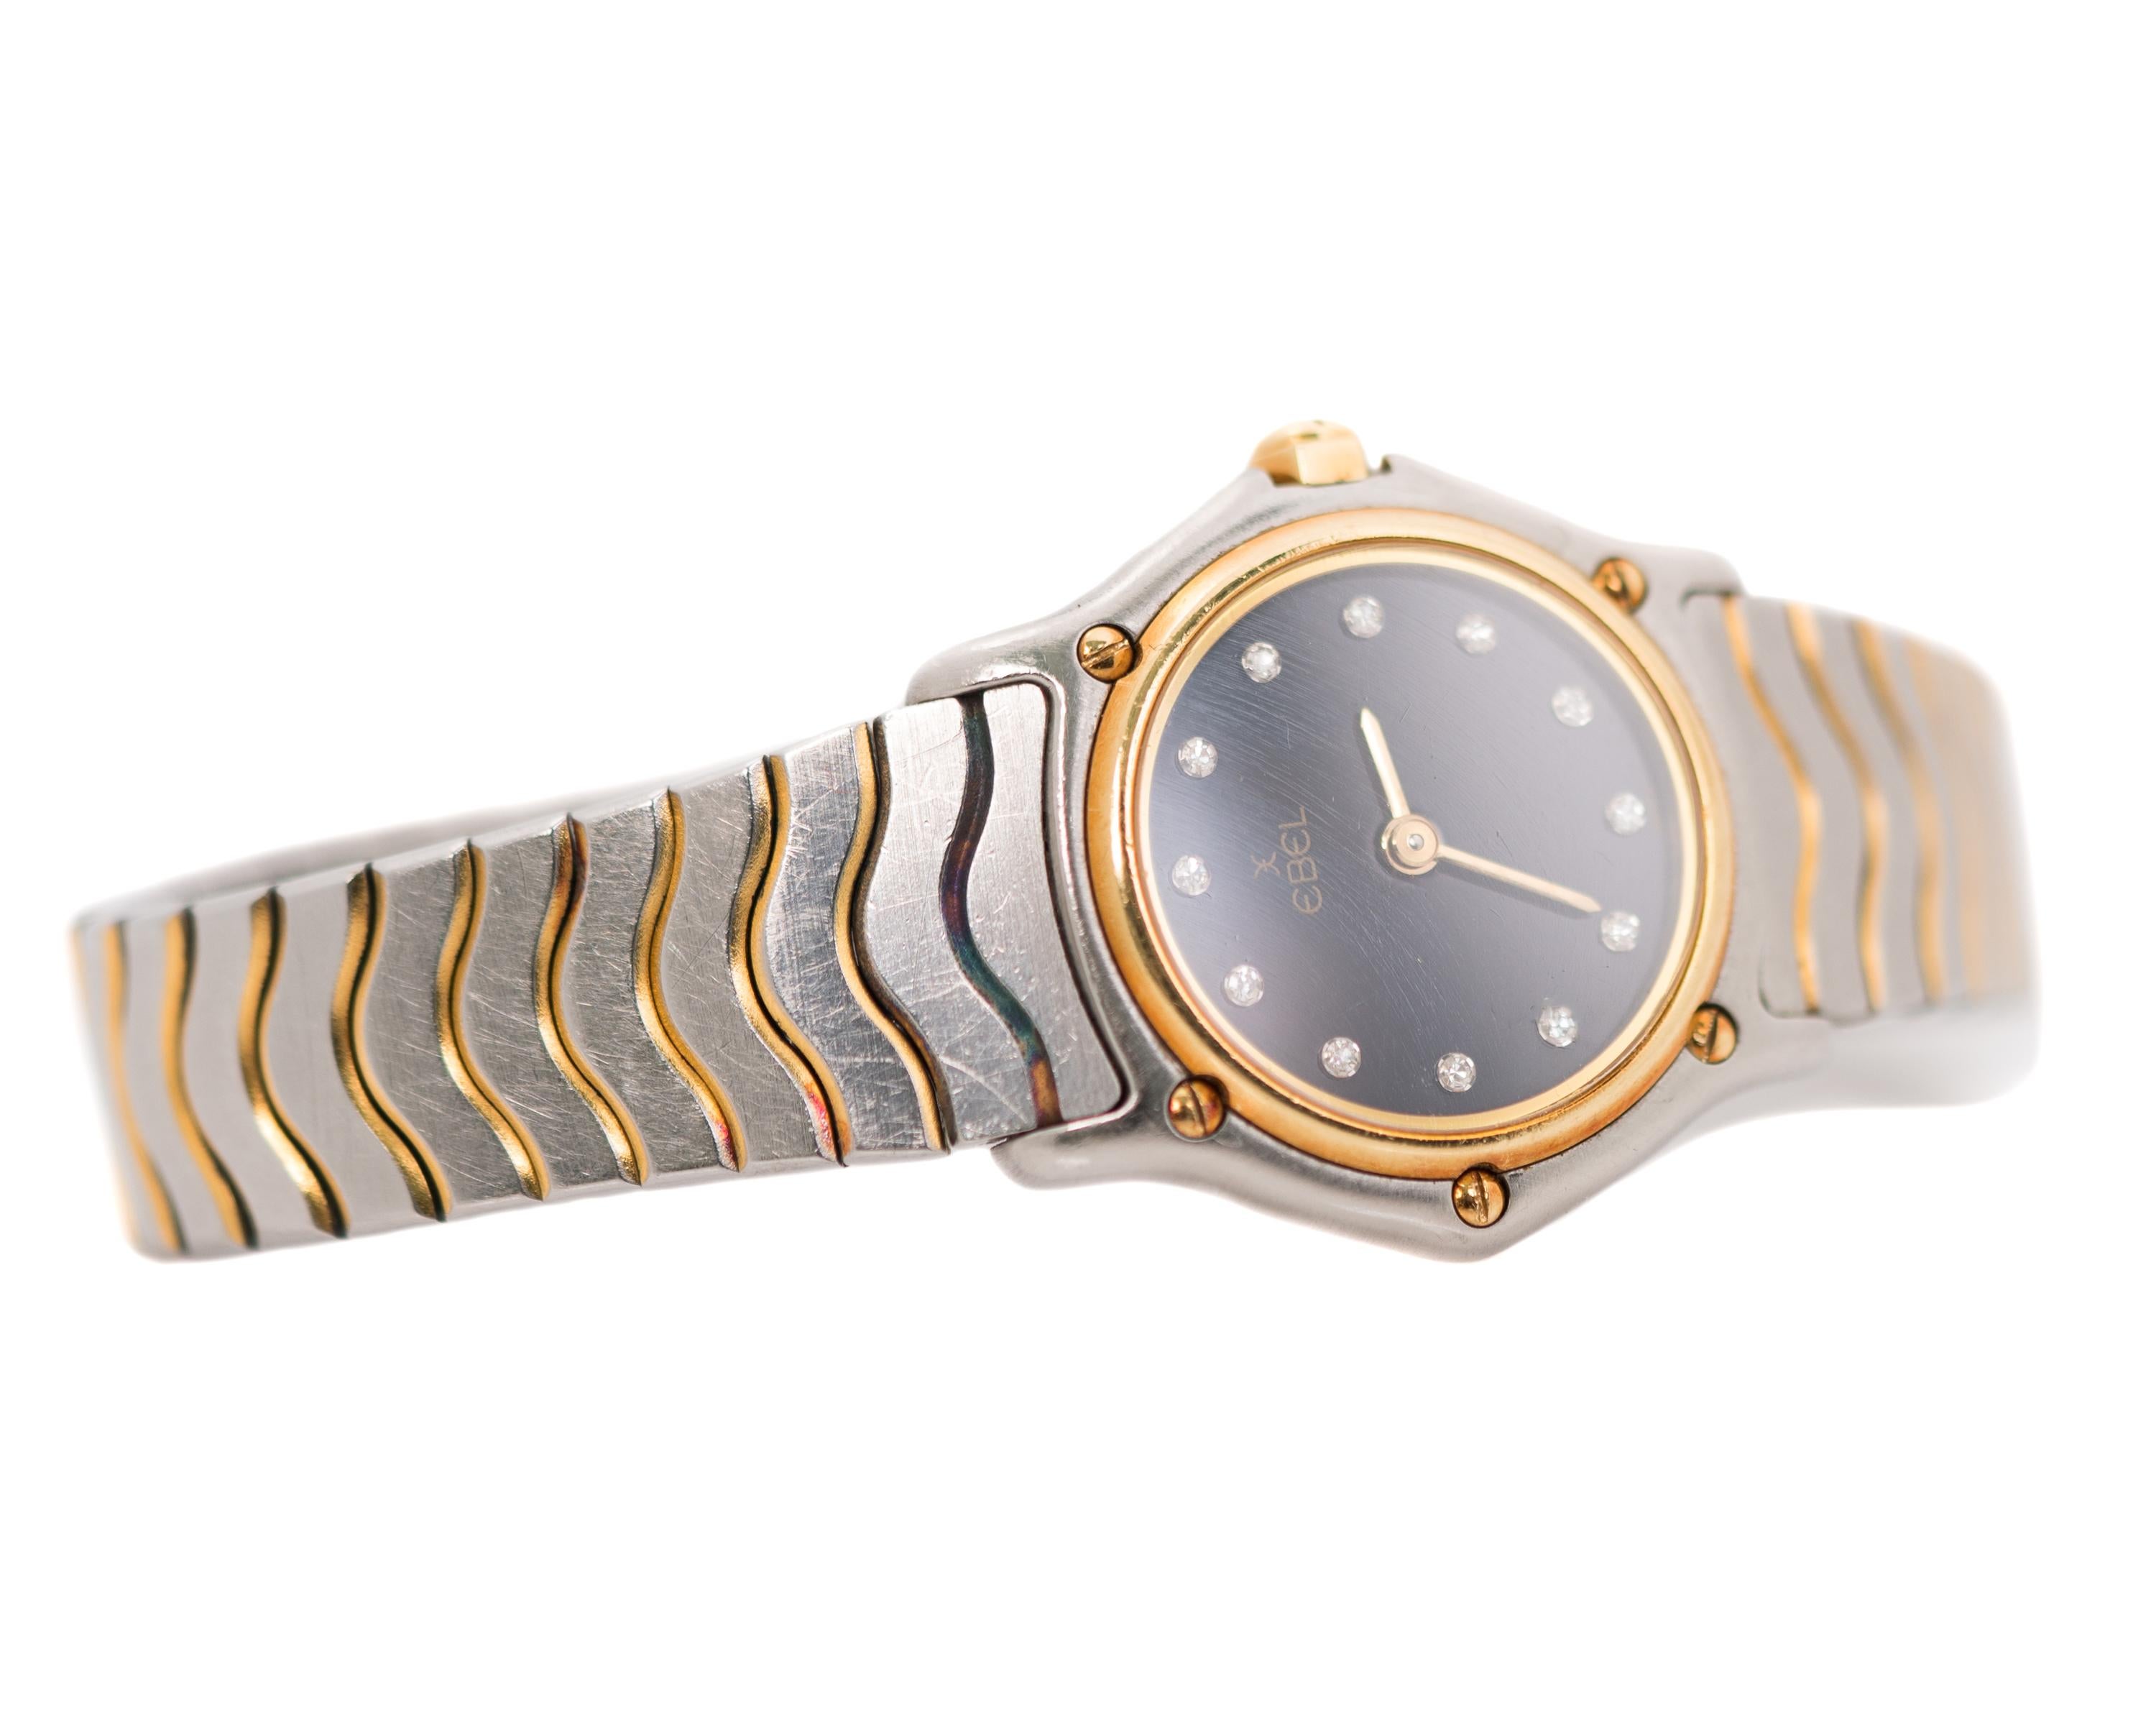 Round Cut Ebel Ladies 18K Yellow Gold, Stainless Steel & Diamond Quartz Wrist Watch, 1990s